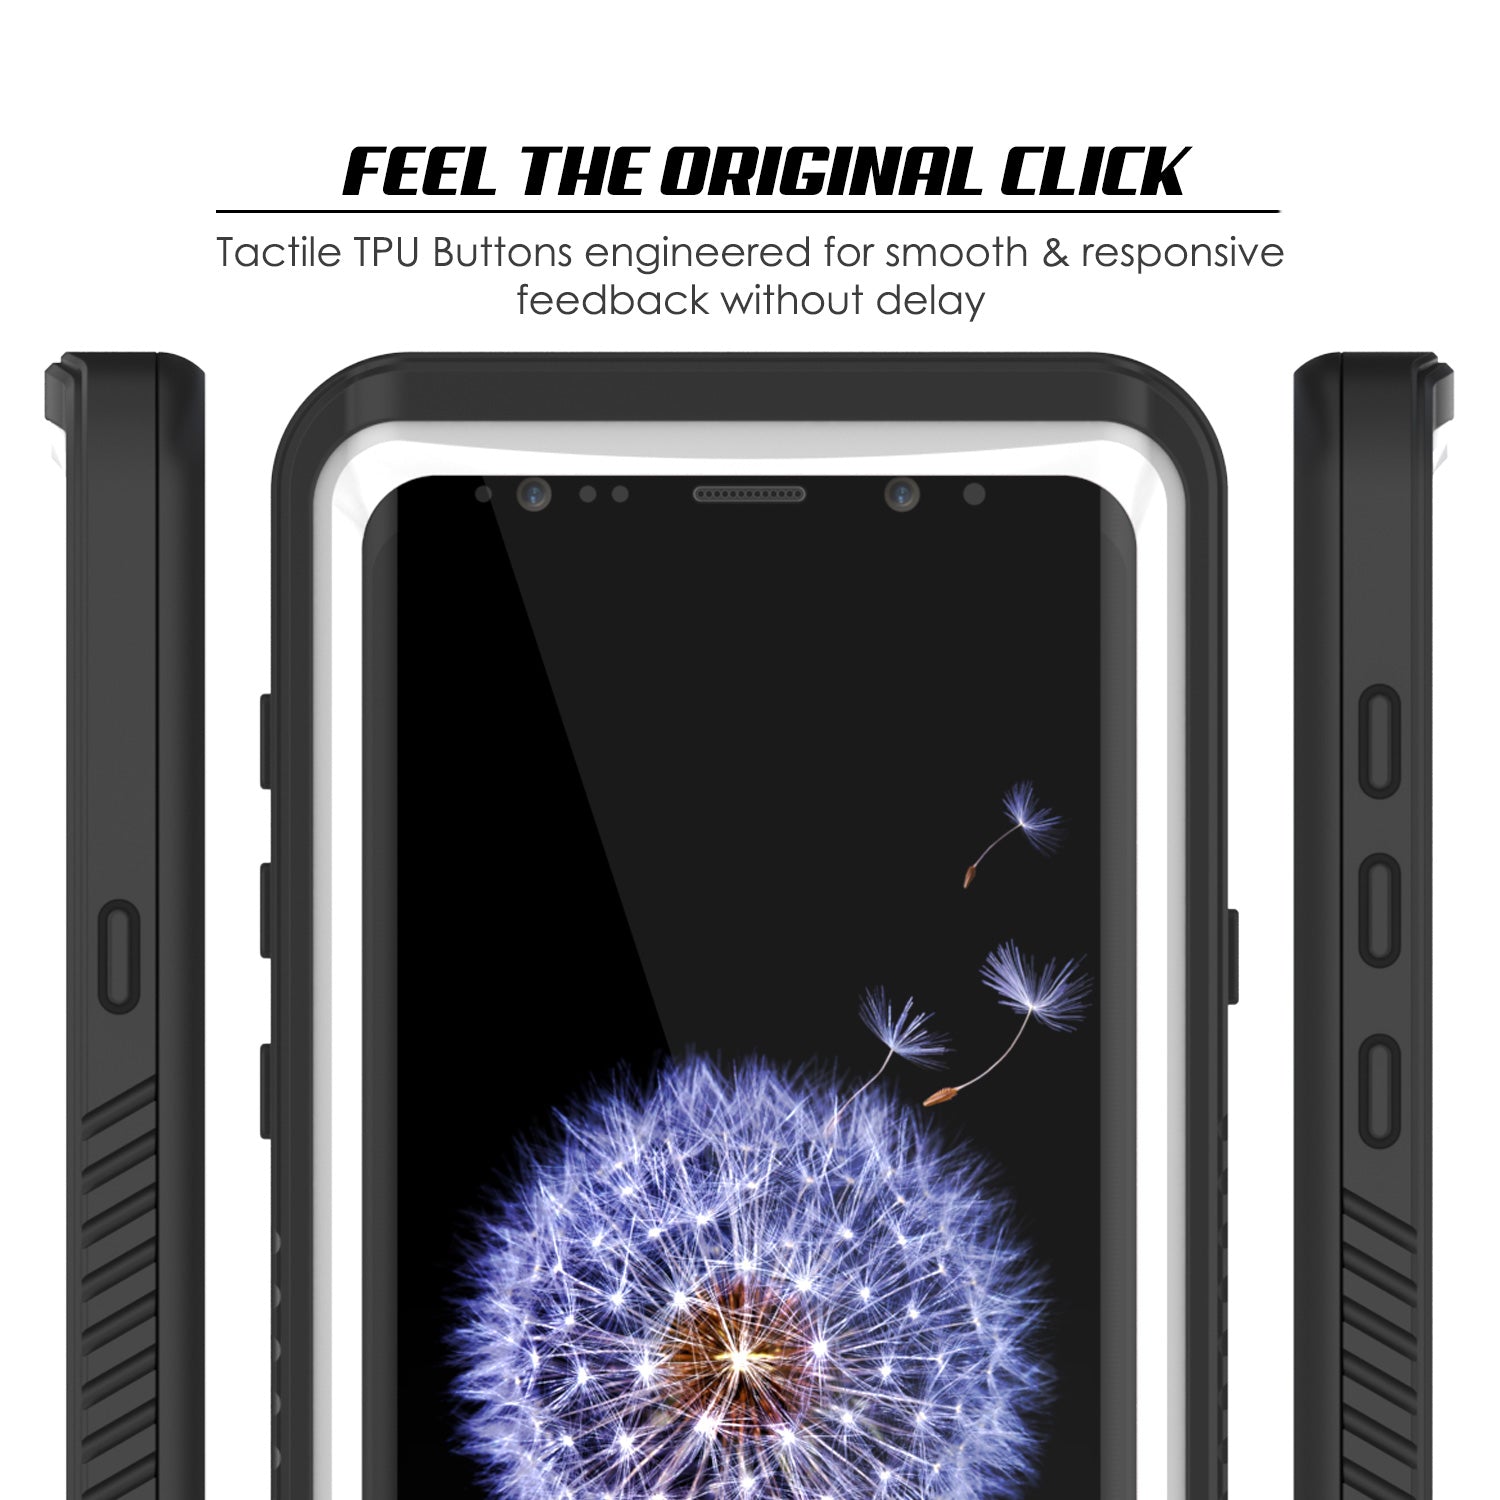 Punkcase Galaxy S9 Extreme Series Waterproof Body | White